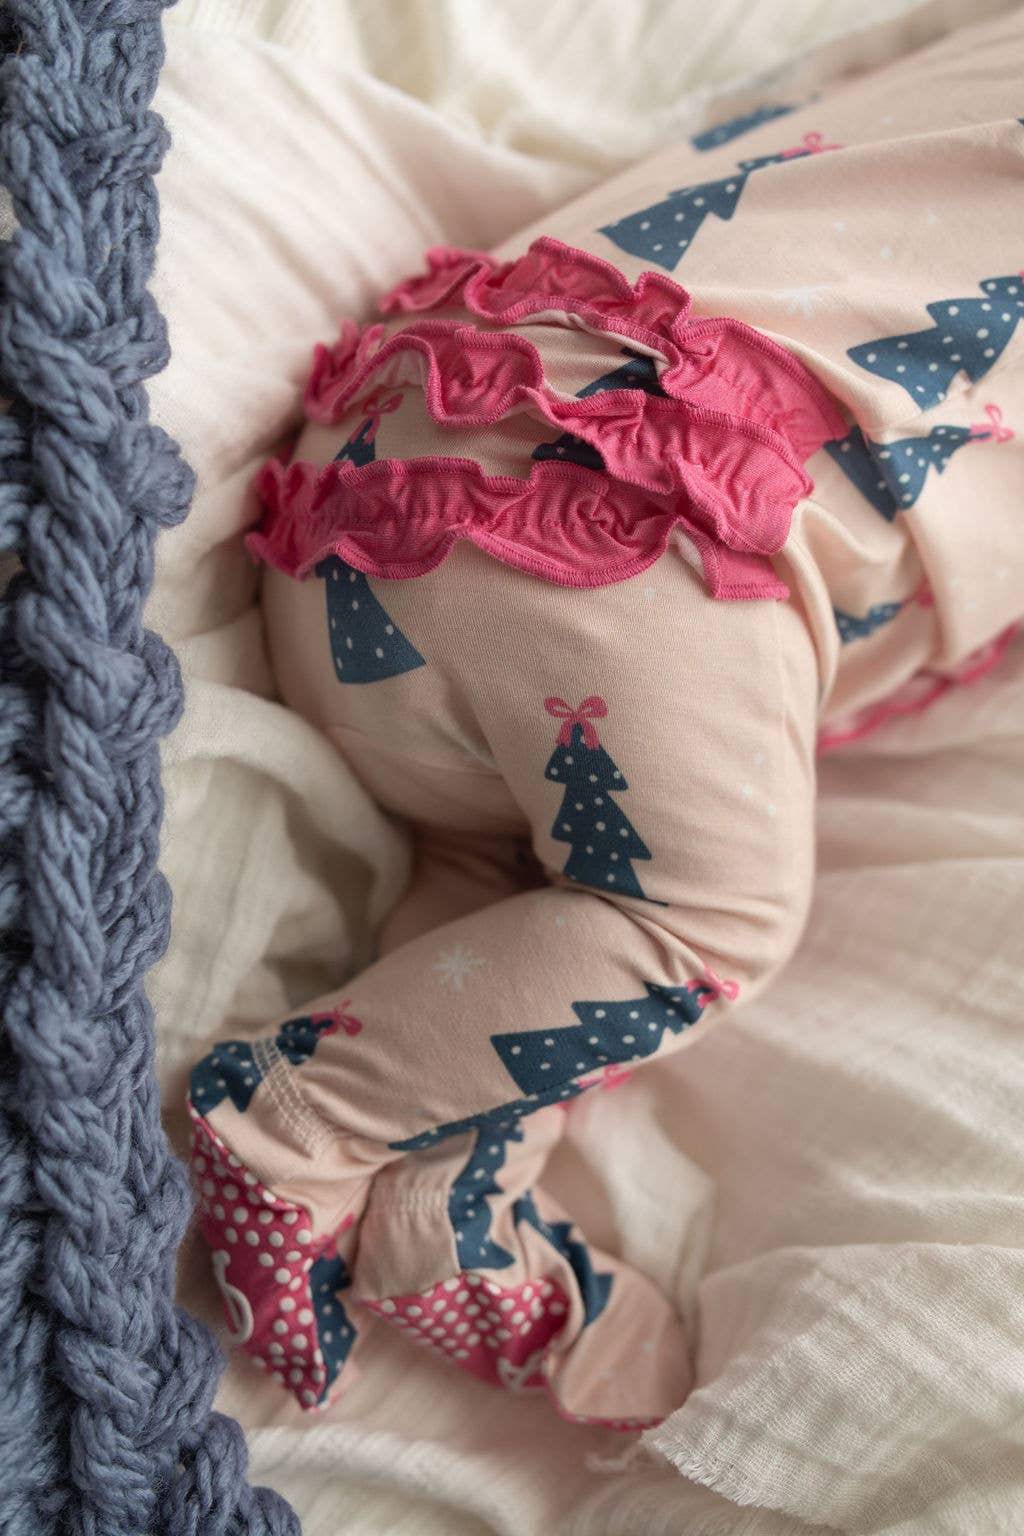 Dolly Lana Bamboo Baby Zip Sleeper - Pink Christmas